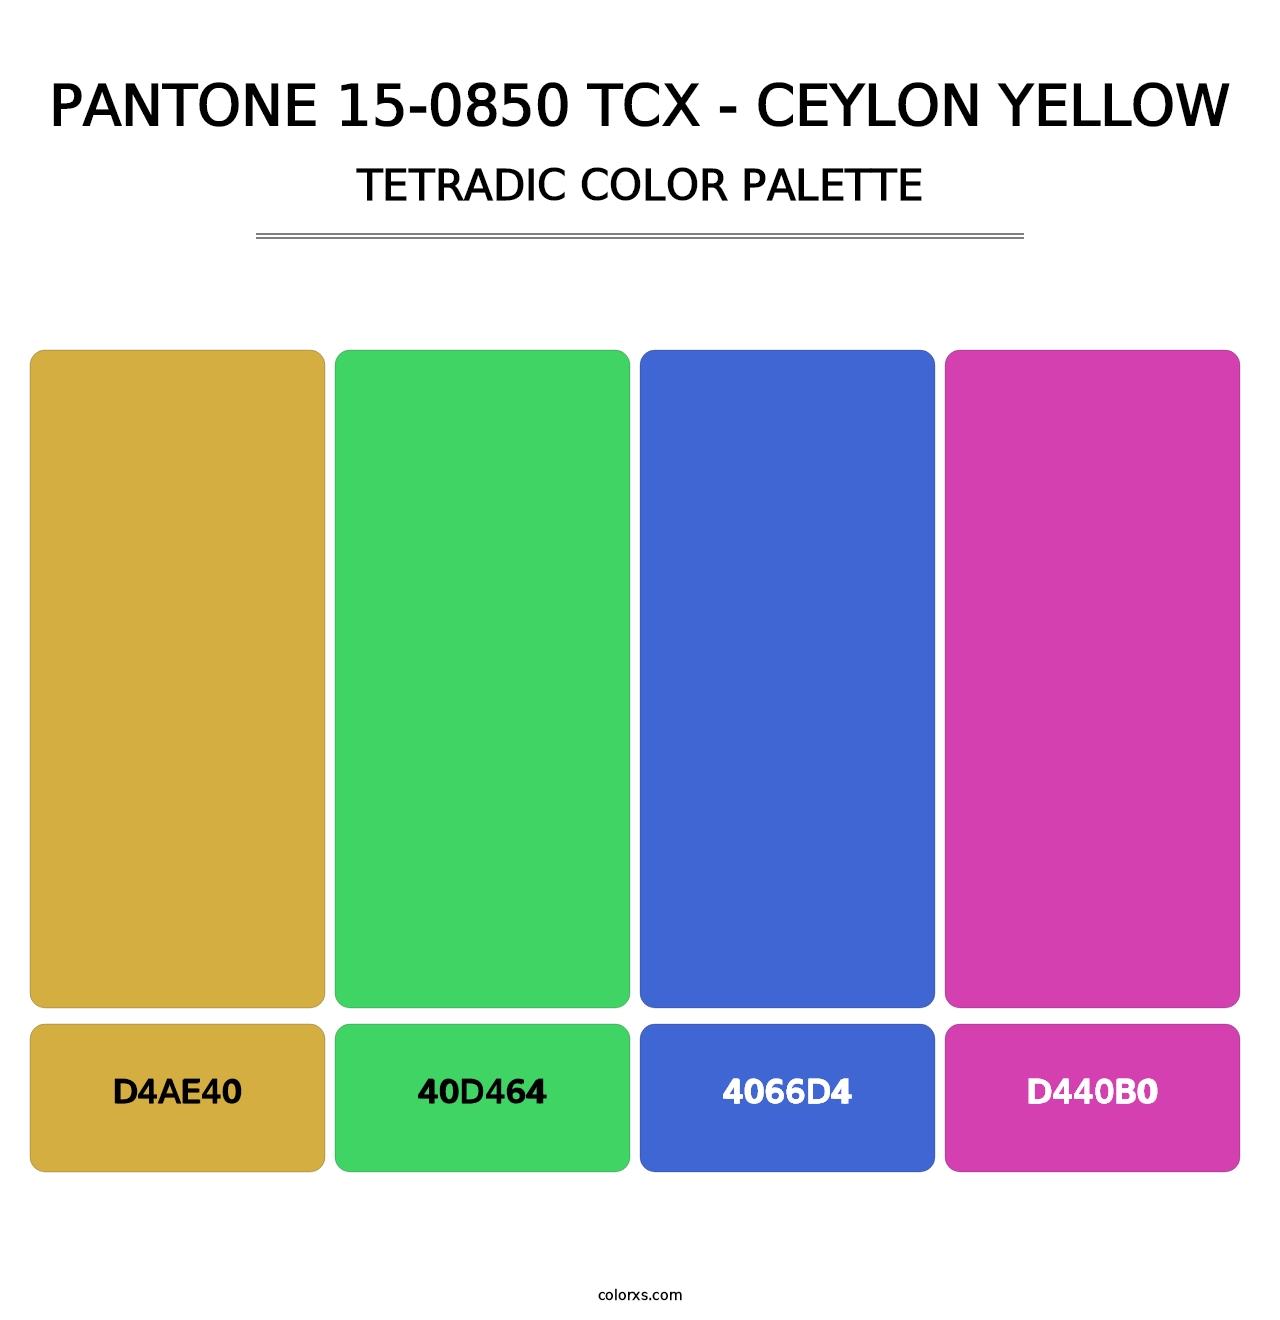 PANTONE 15-0850 TCX - Ceylon Yellow - Tetradic Color Palette